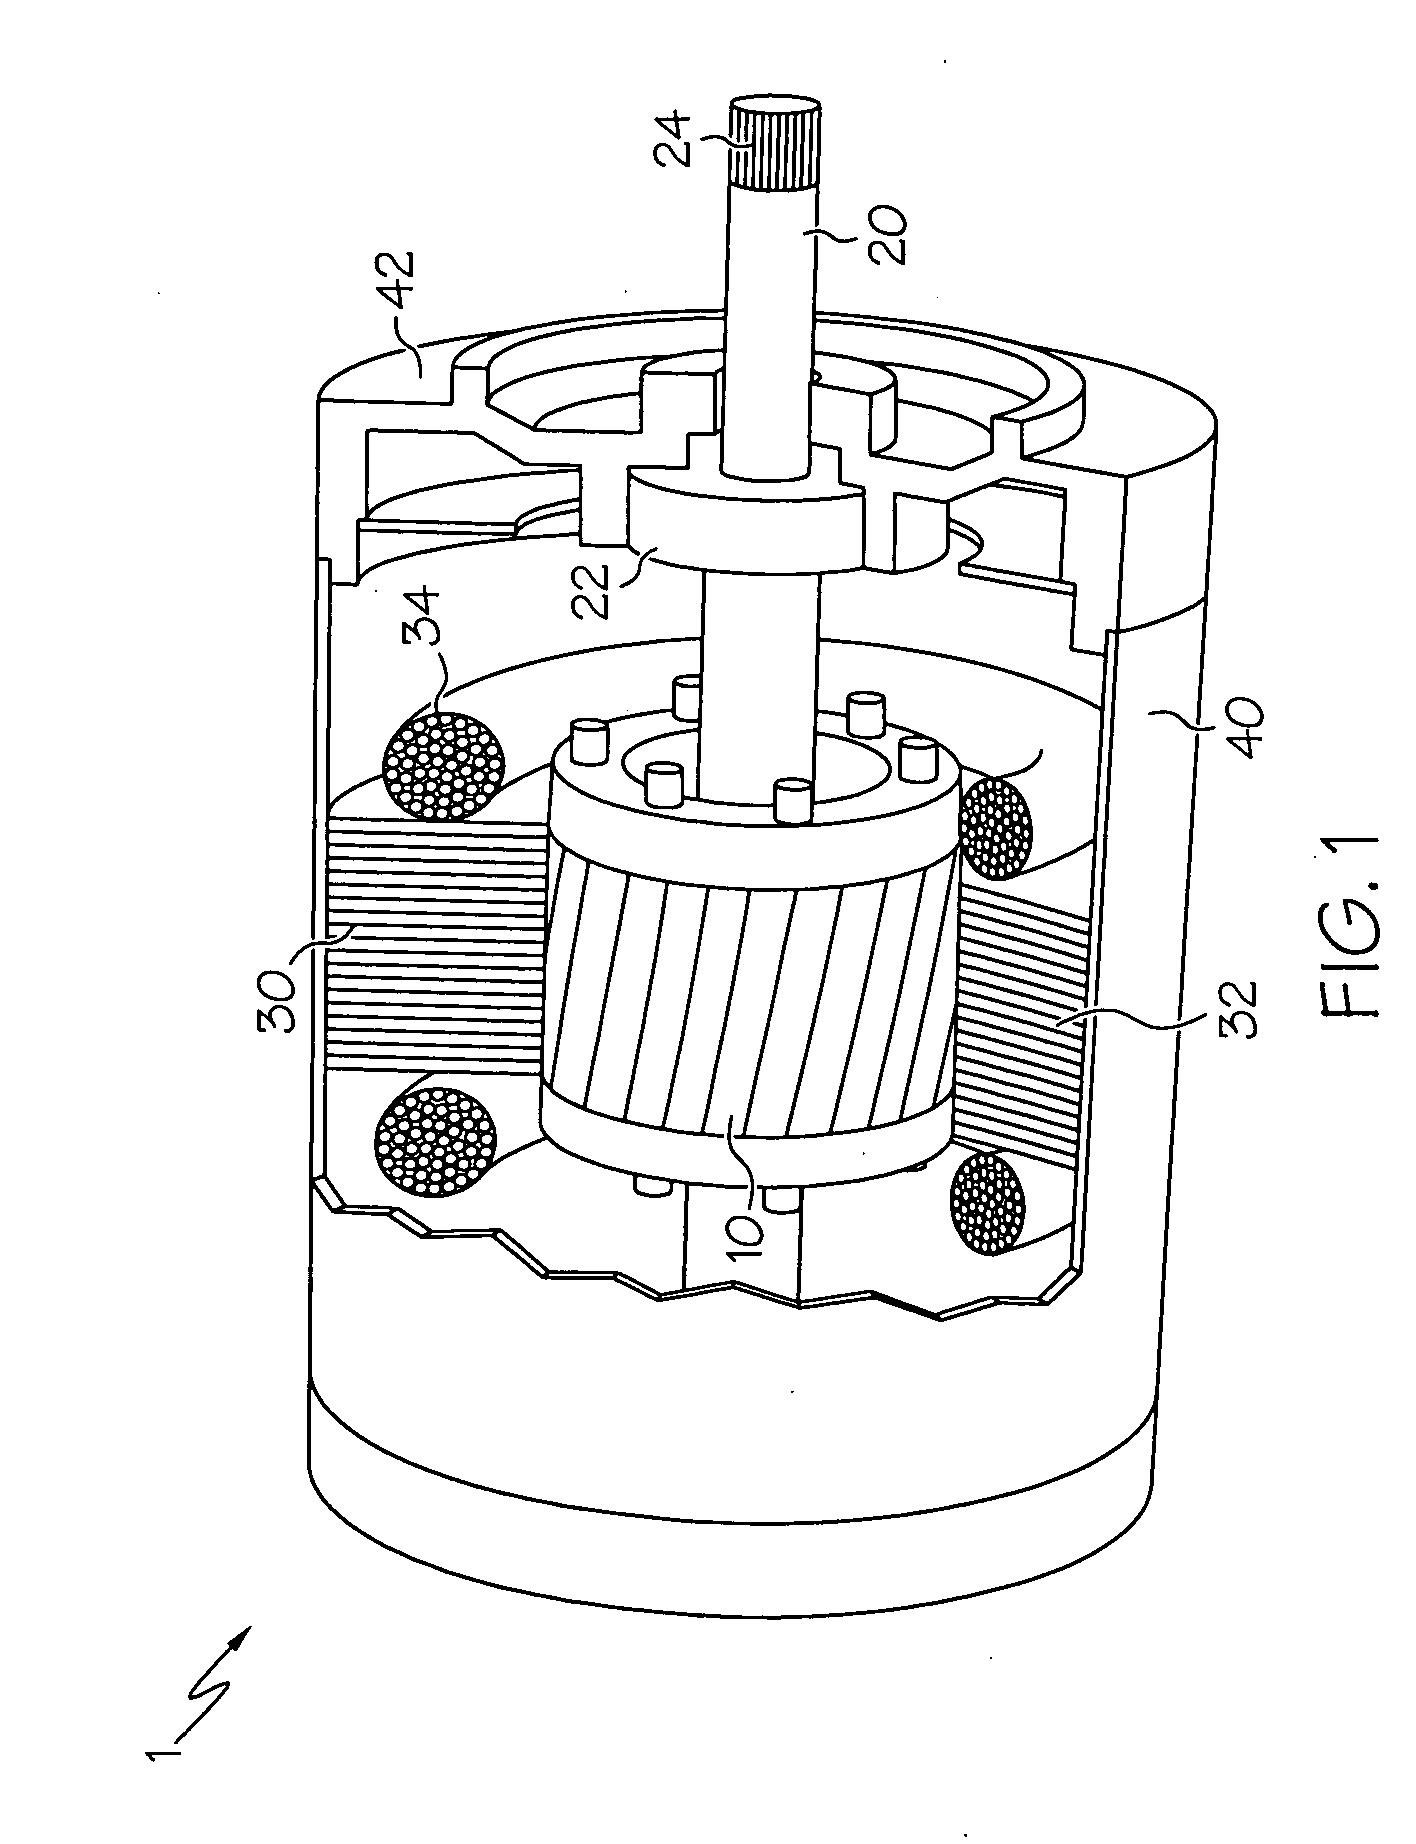 Pressure casting of electric rotors